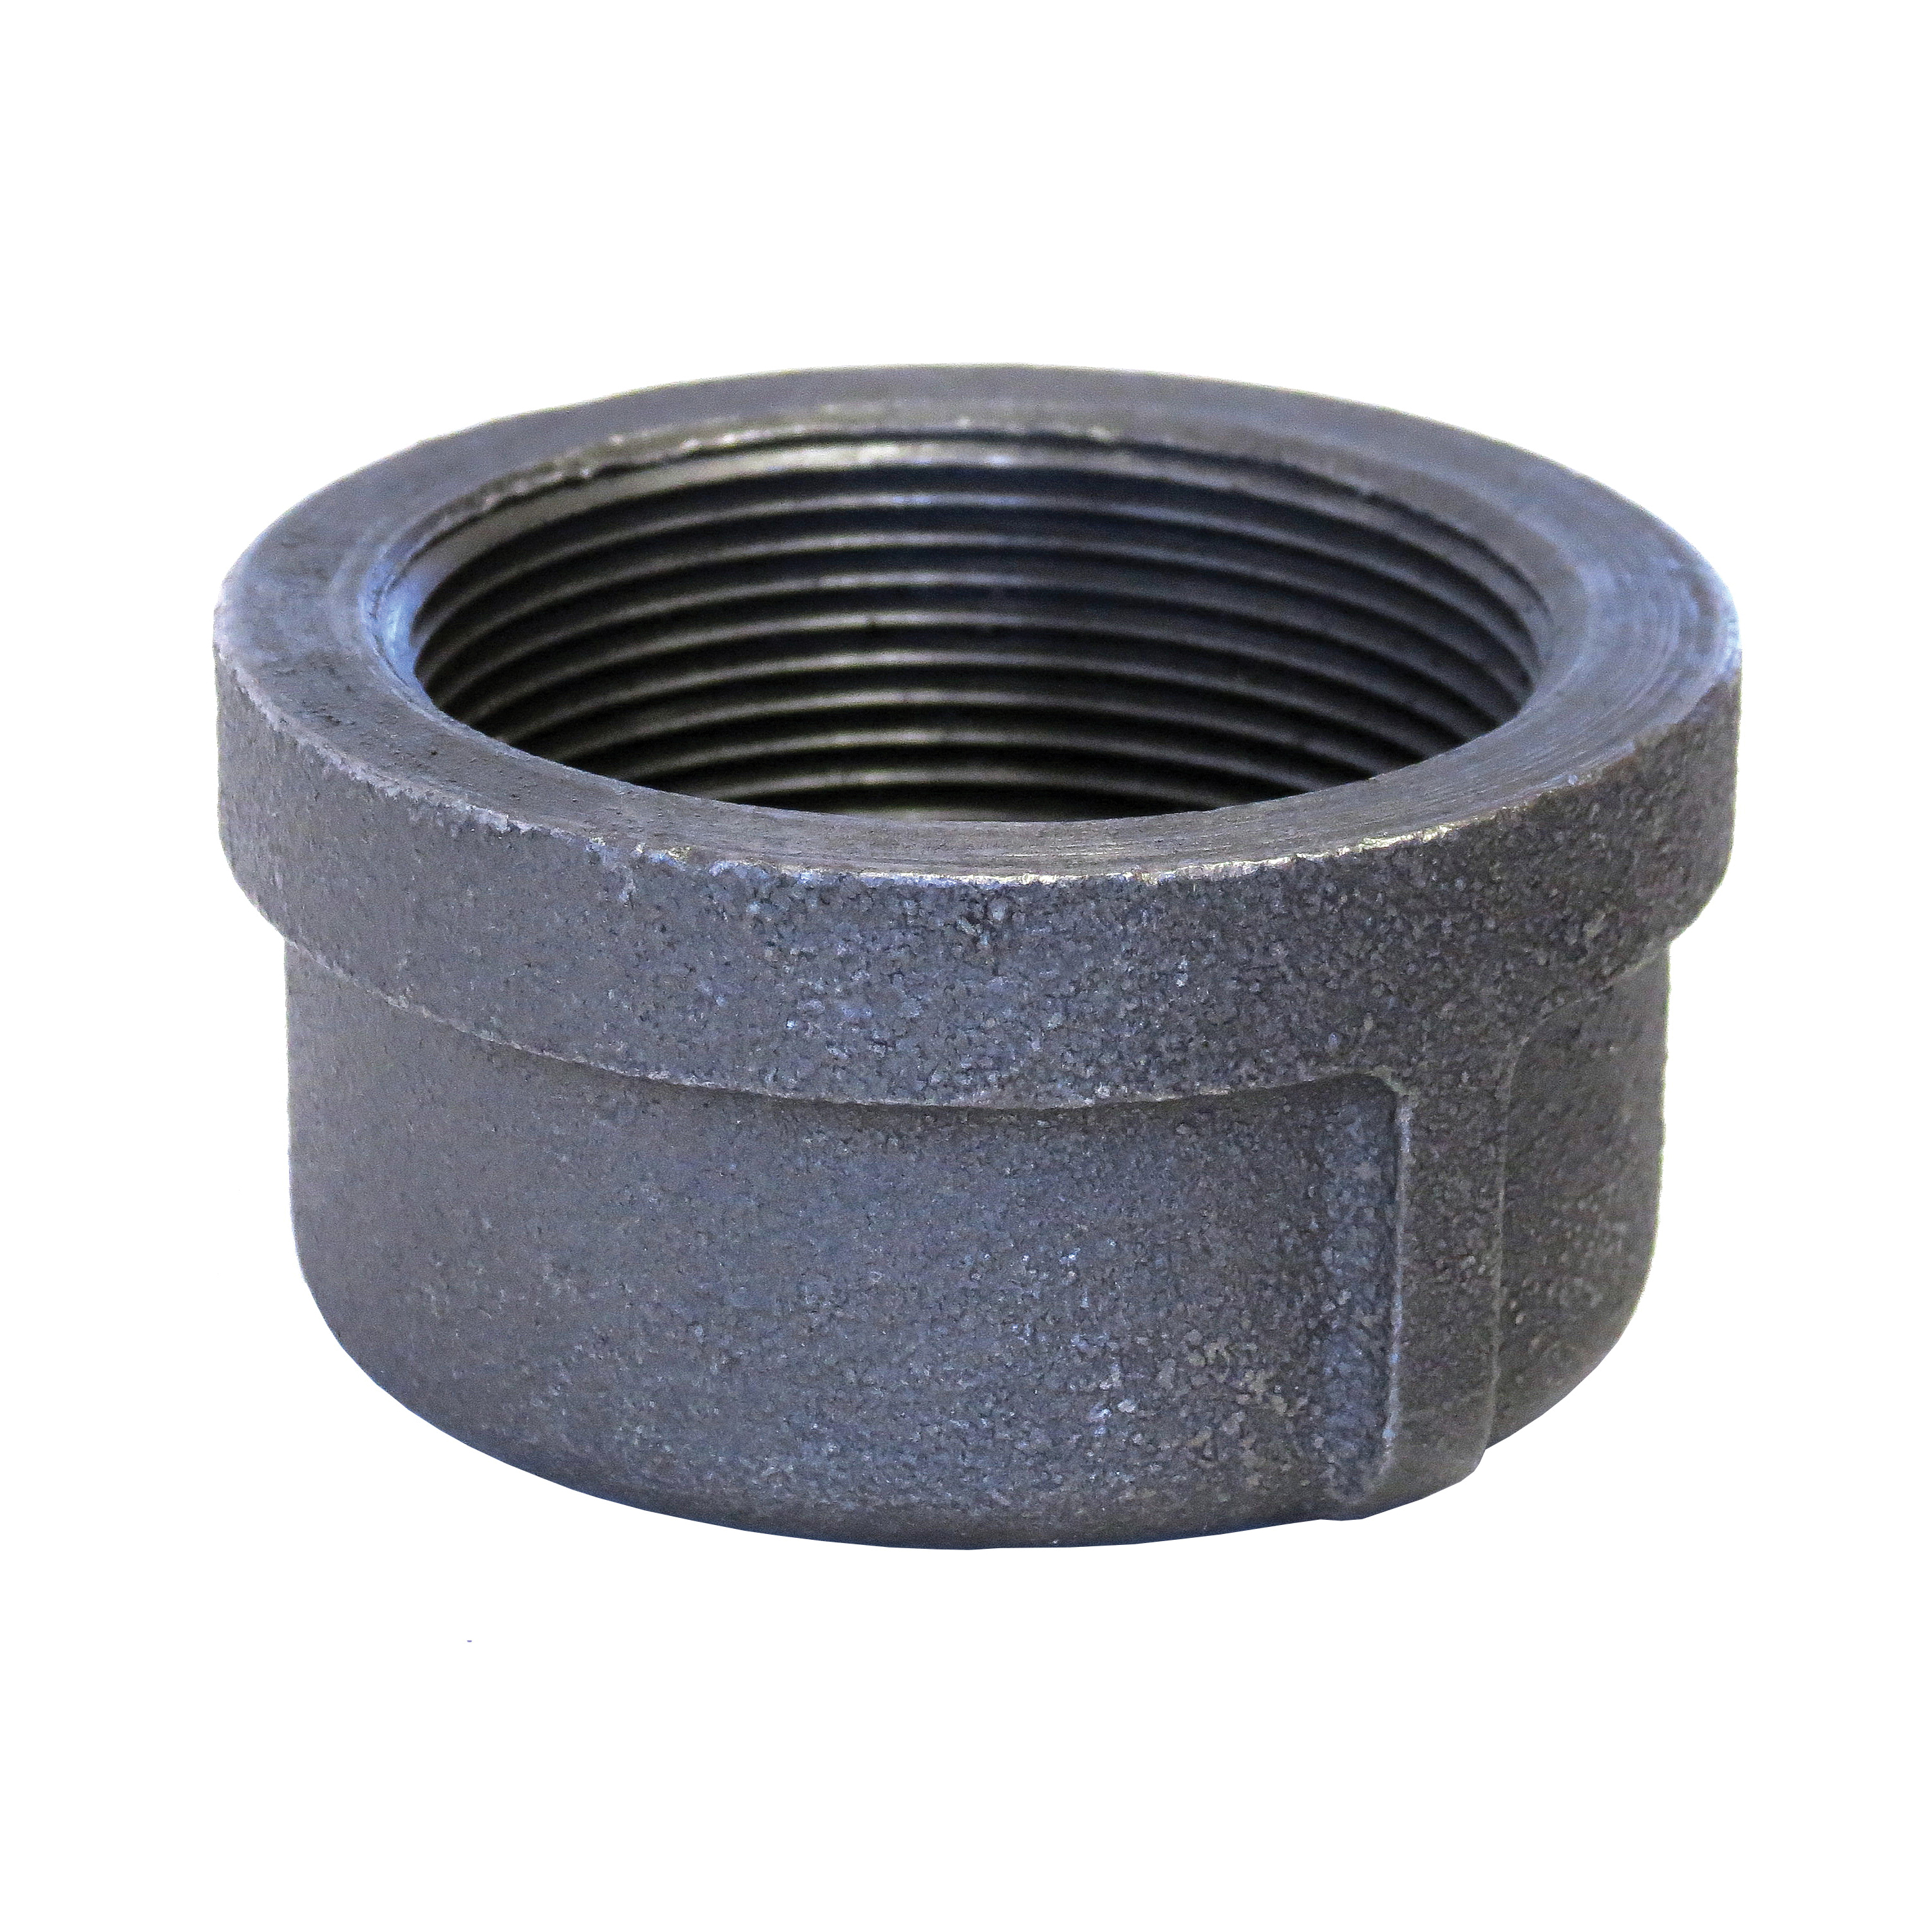 Anvil® 0318900081 Standard Pipe Cap, 3/8 in Nominal, FNPT End Style, 150 lb, Merchant Steel, Black Oxide, Domestic